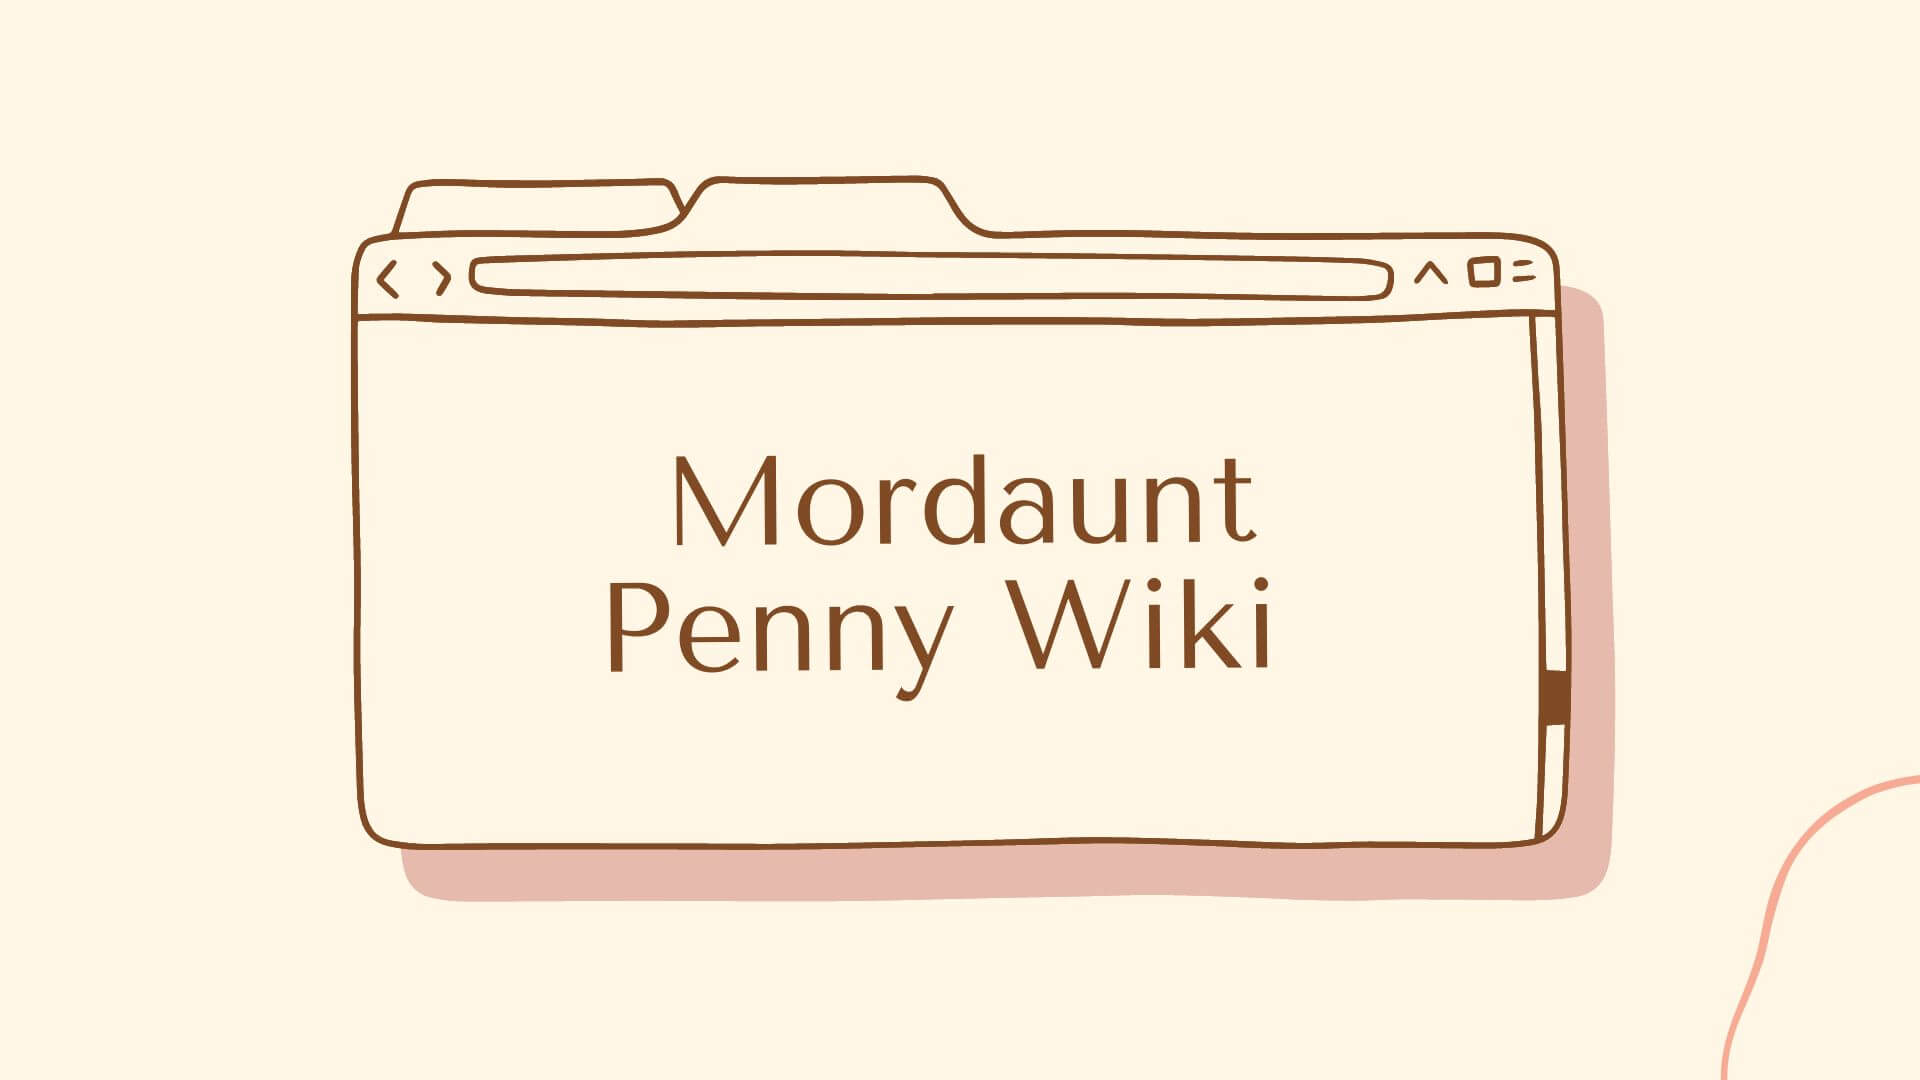 Mordaunt Penny Wiki